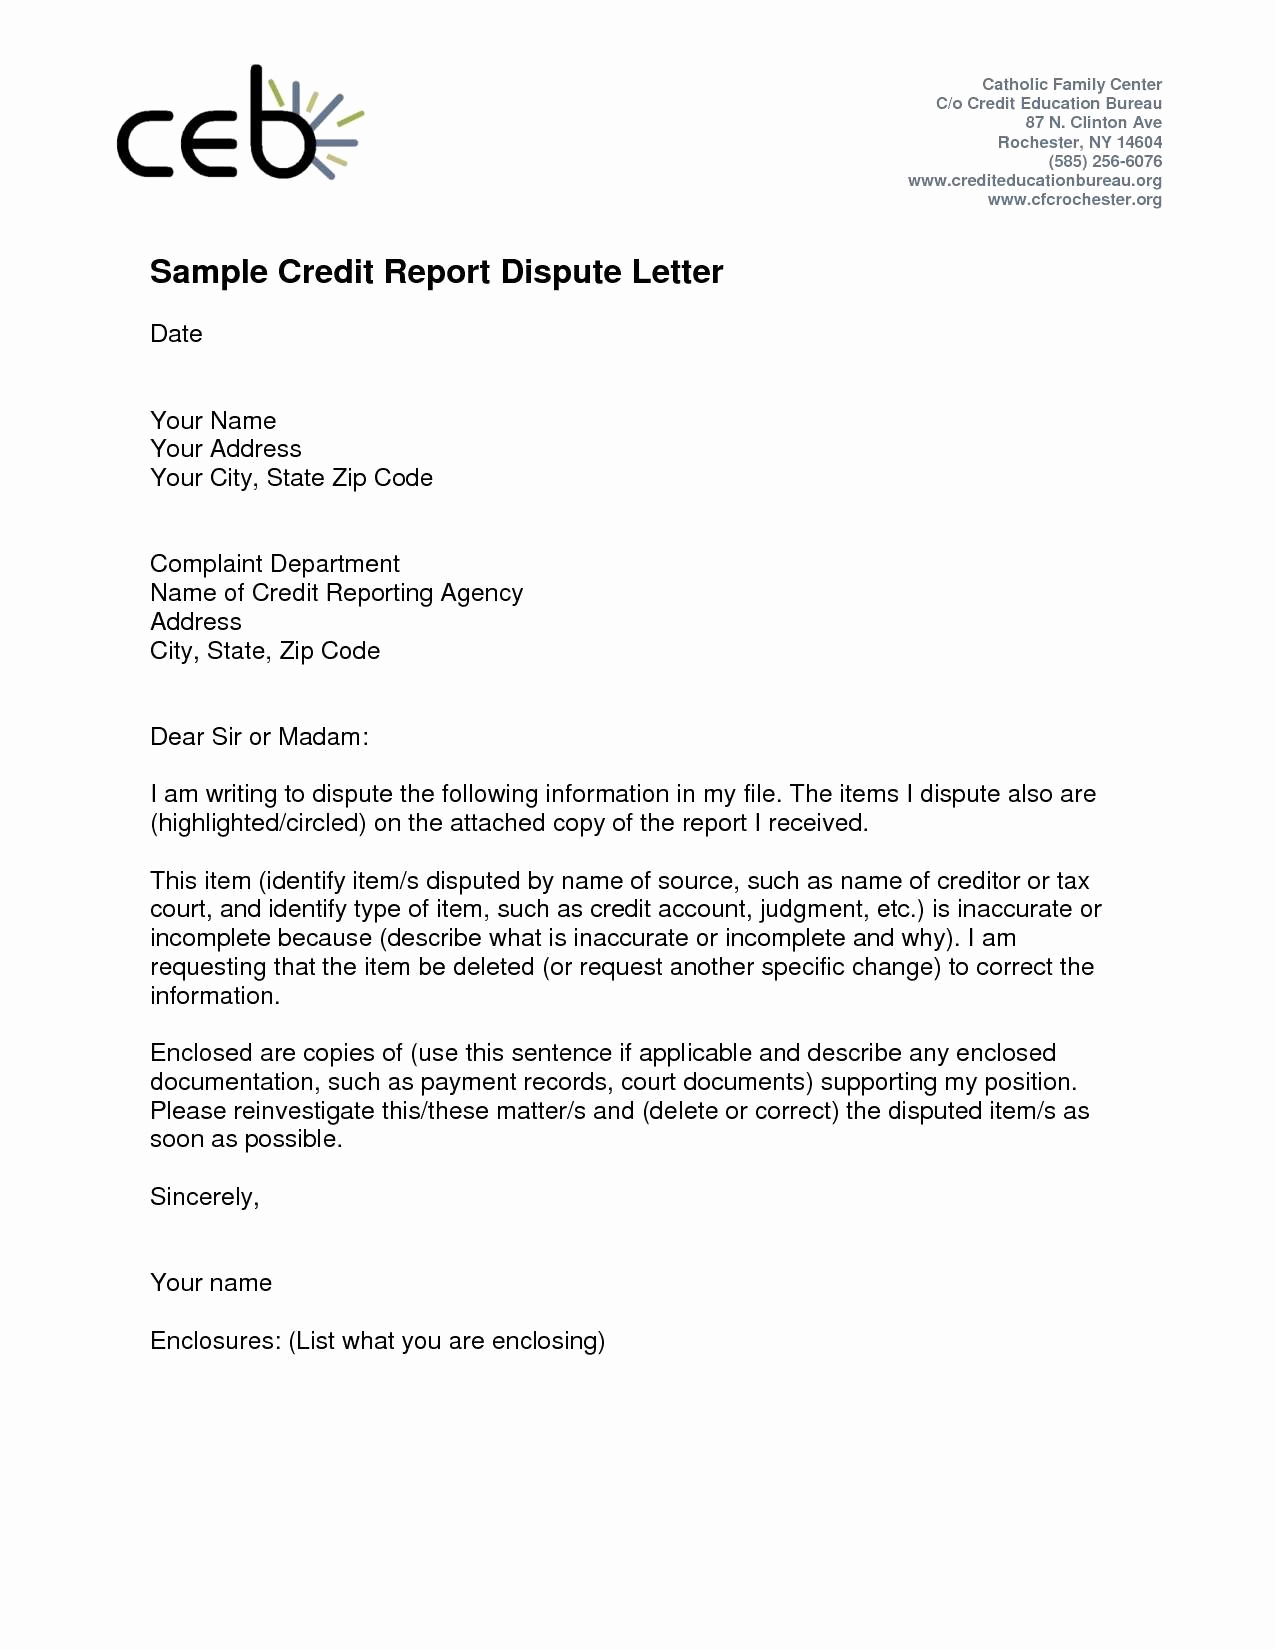 Debt Validation Letter Template Beautiful Debt Validation Letter to Credit Bureaus Letternewco